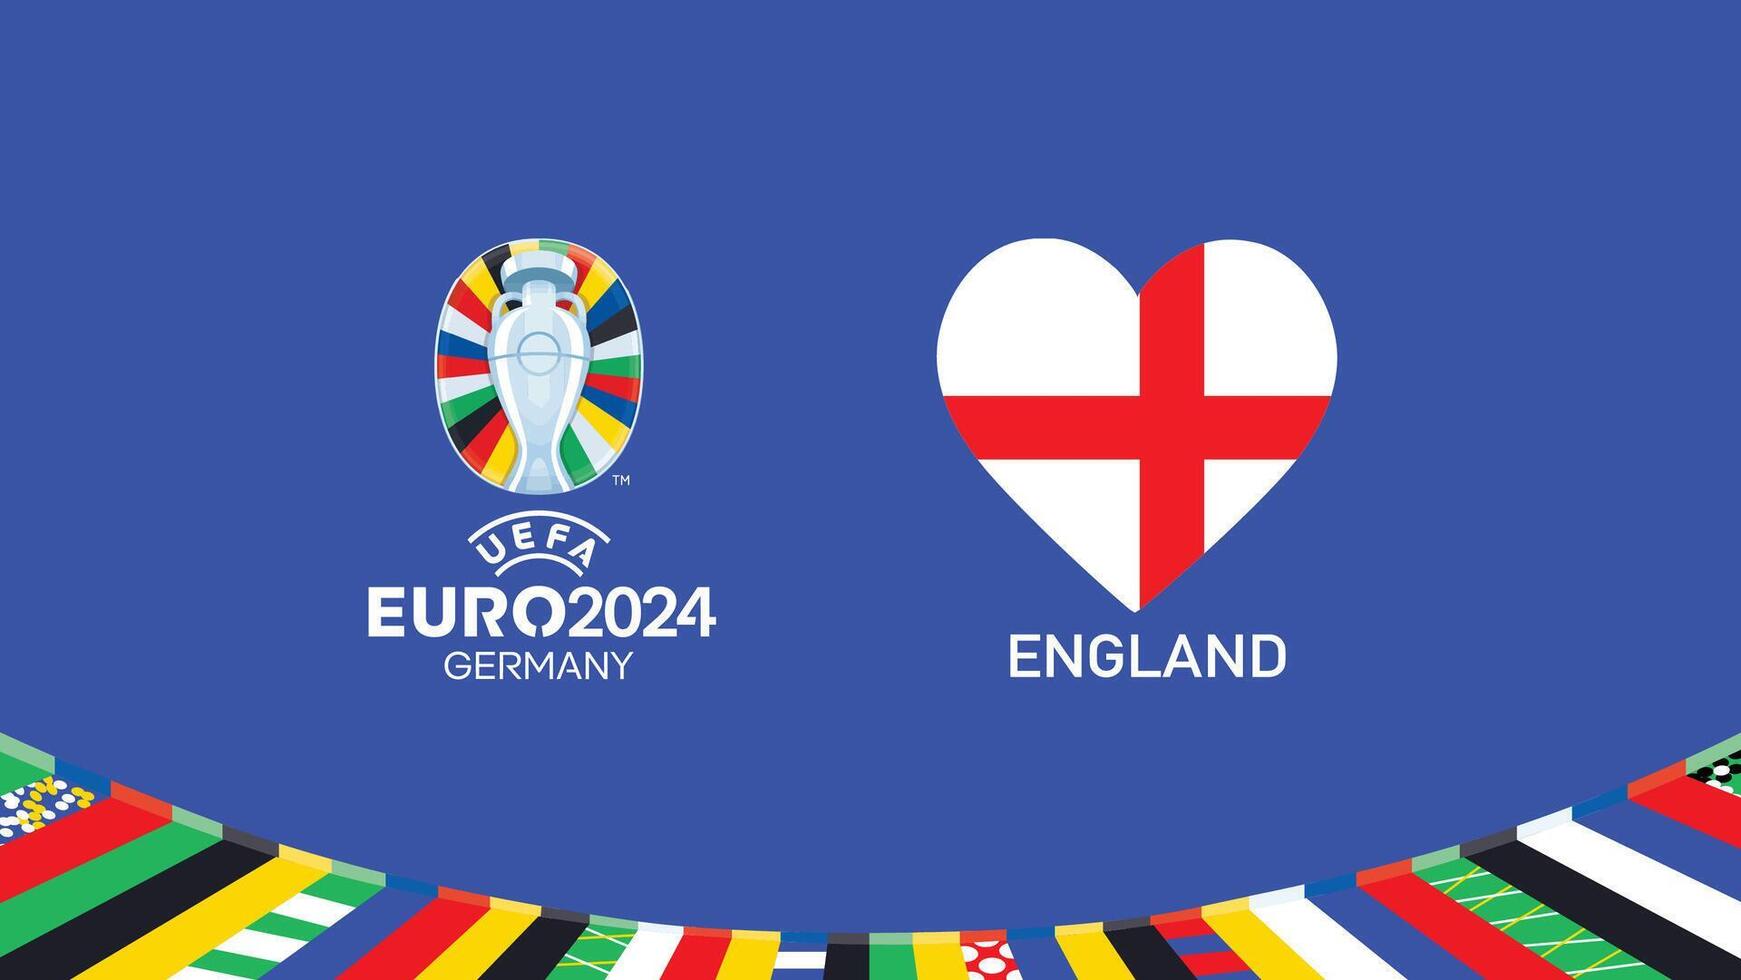 euro 2024 Engeland embleem hart teams ontwerp met officieel symbool logo abstract landen Europese Amerikaans voetbal illustratie vector